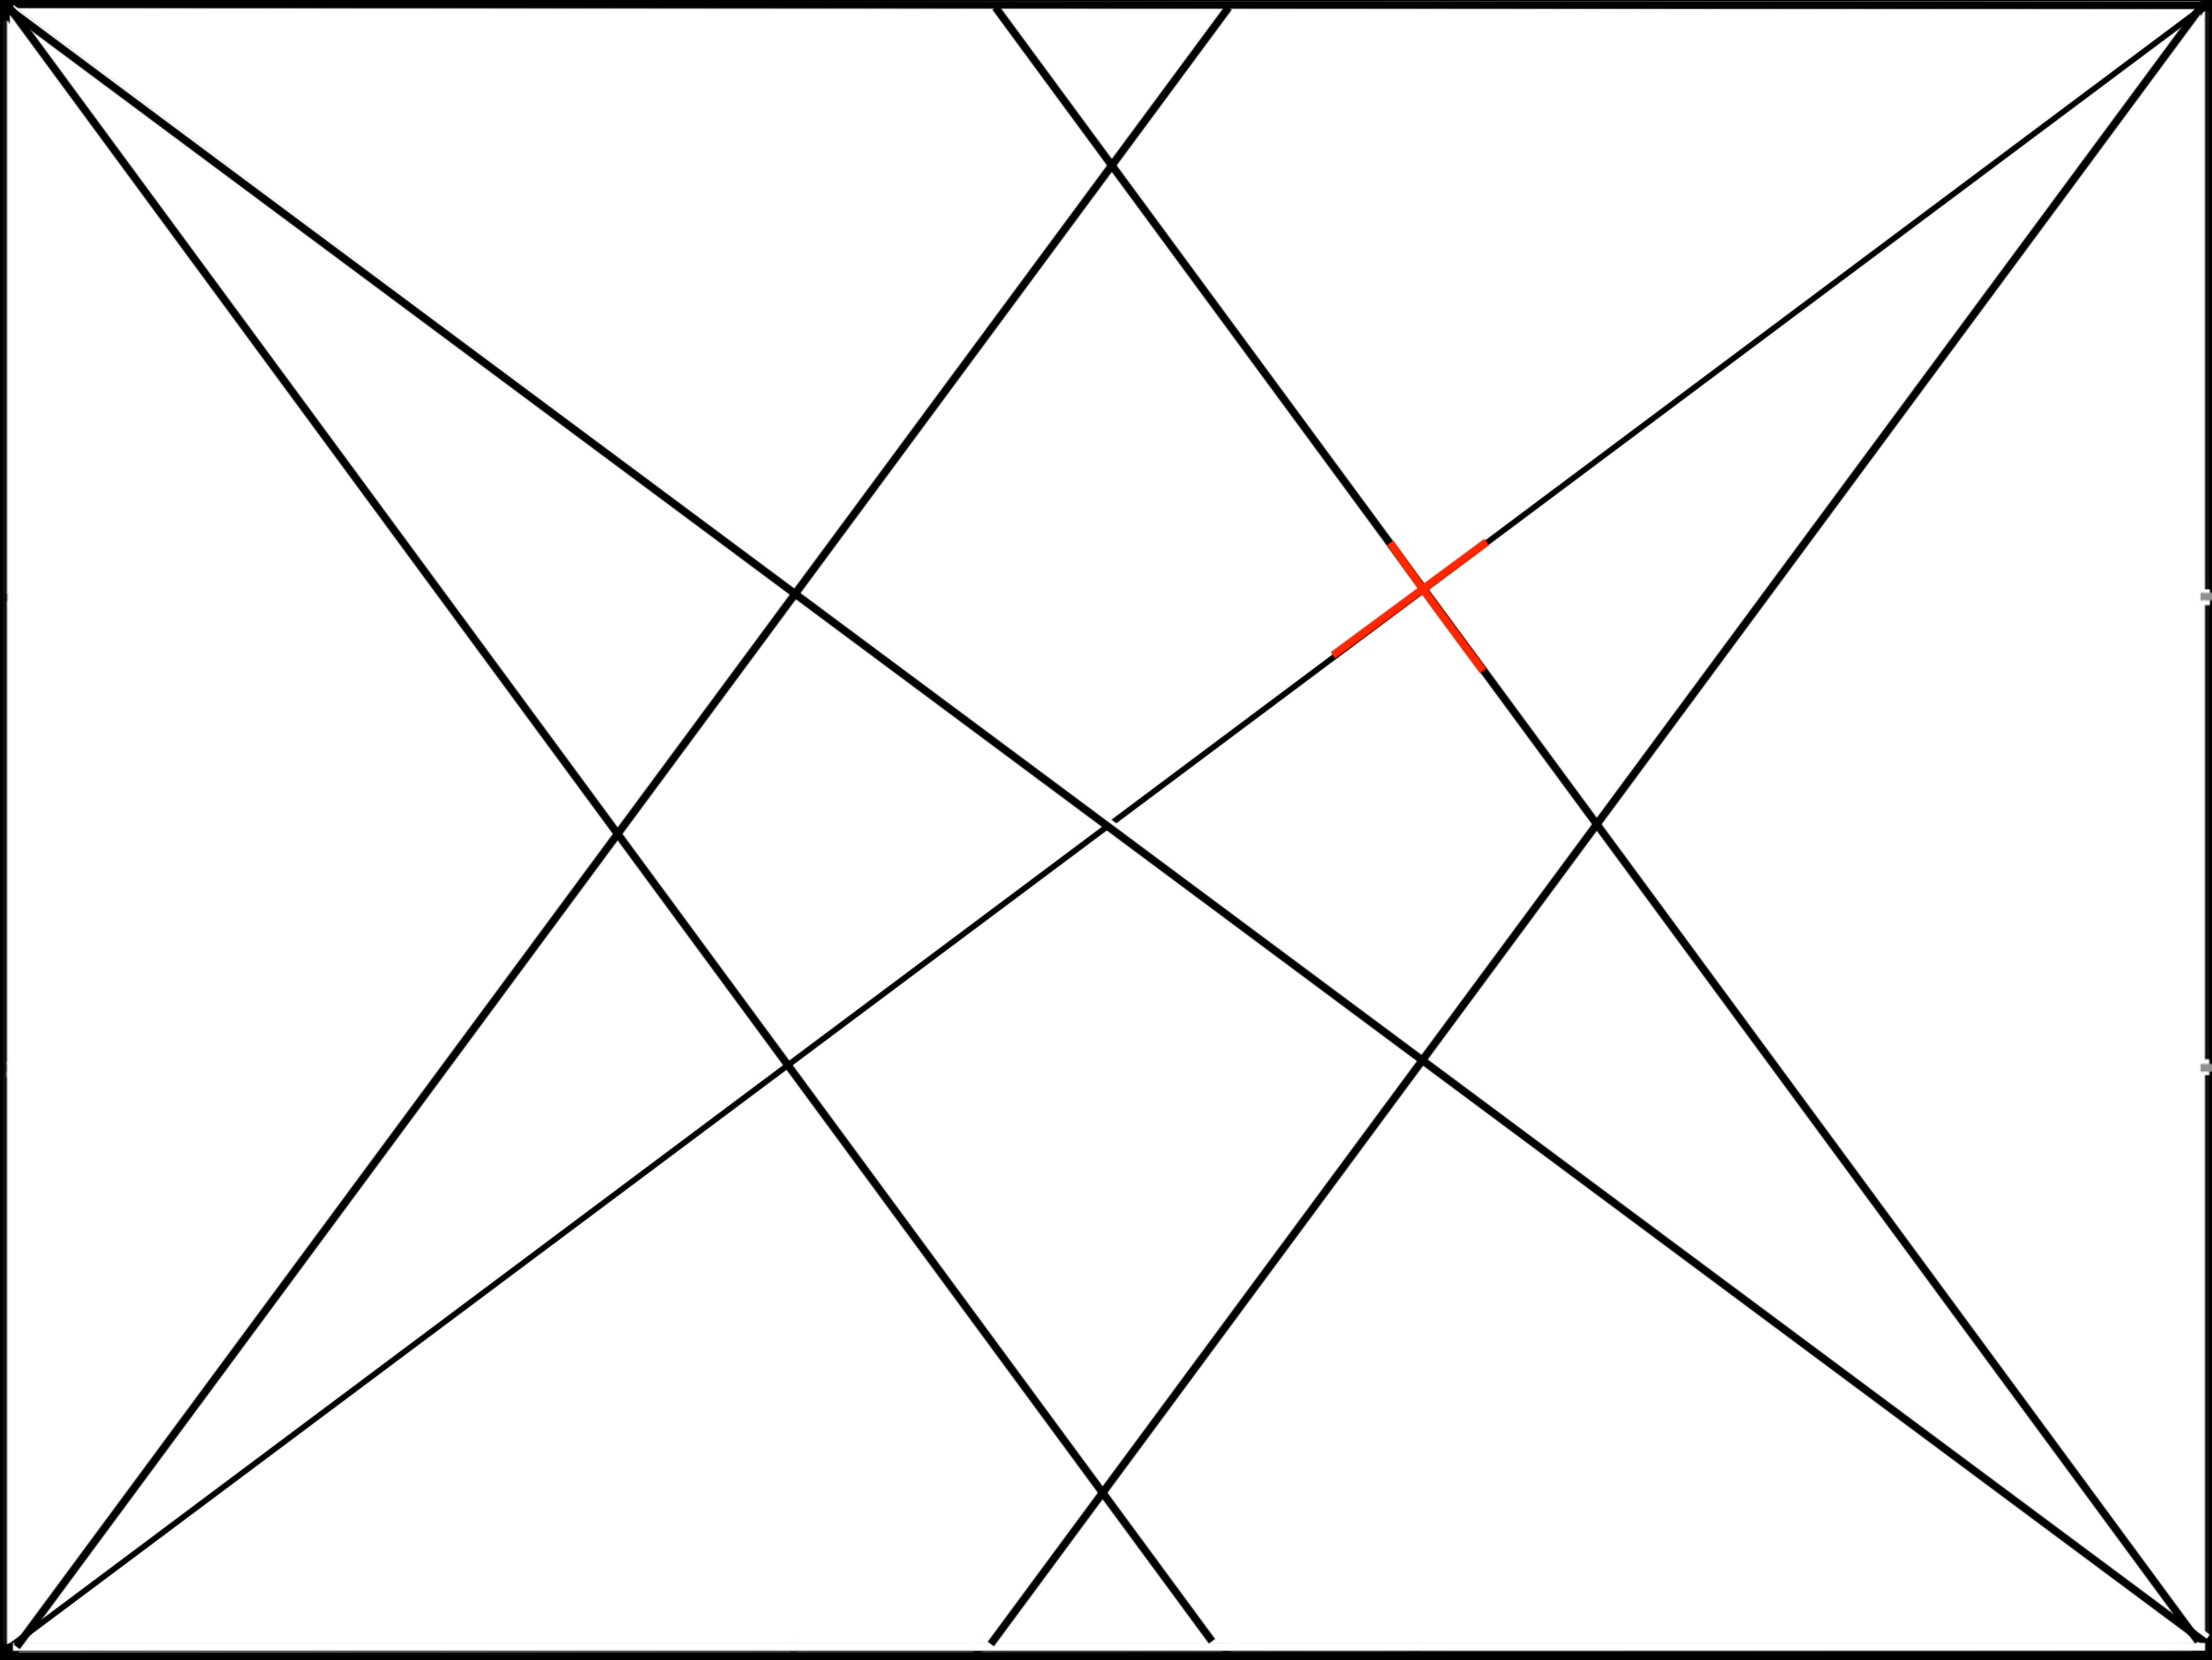 /images/art/4to3basicdynamicsymmetry2maindiagonalsandreciprocals_lg.jpg